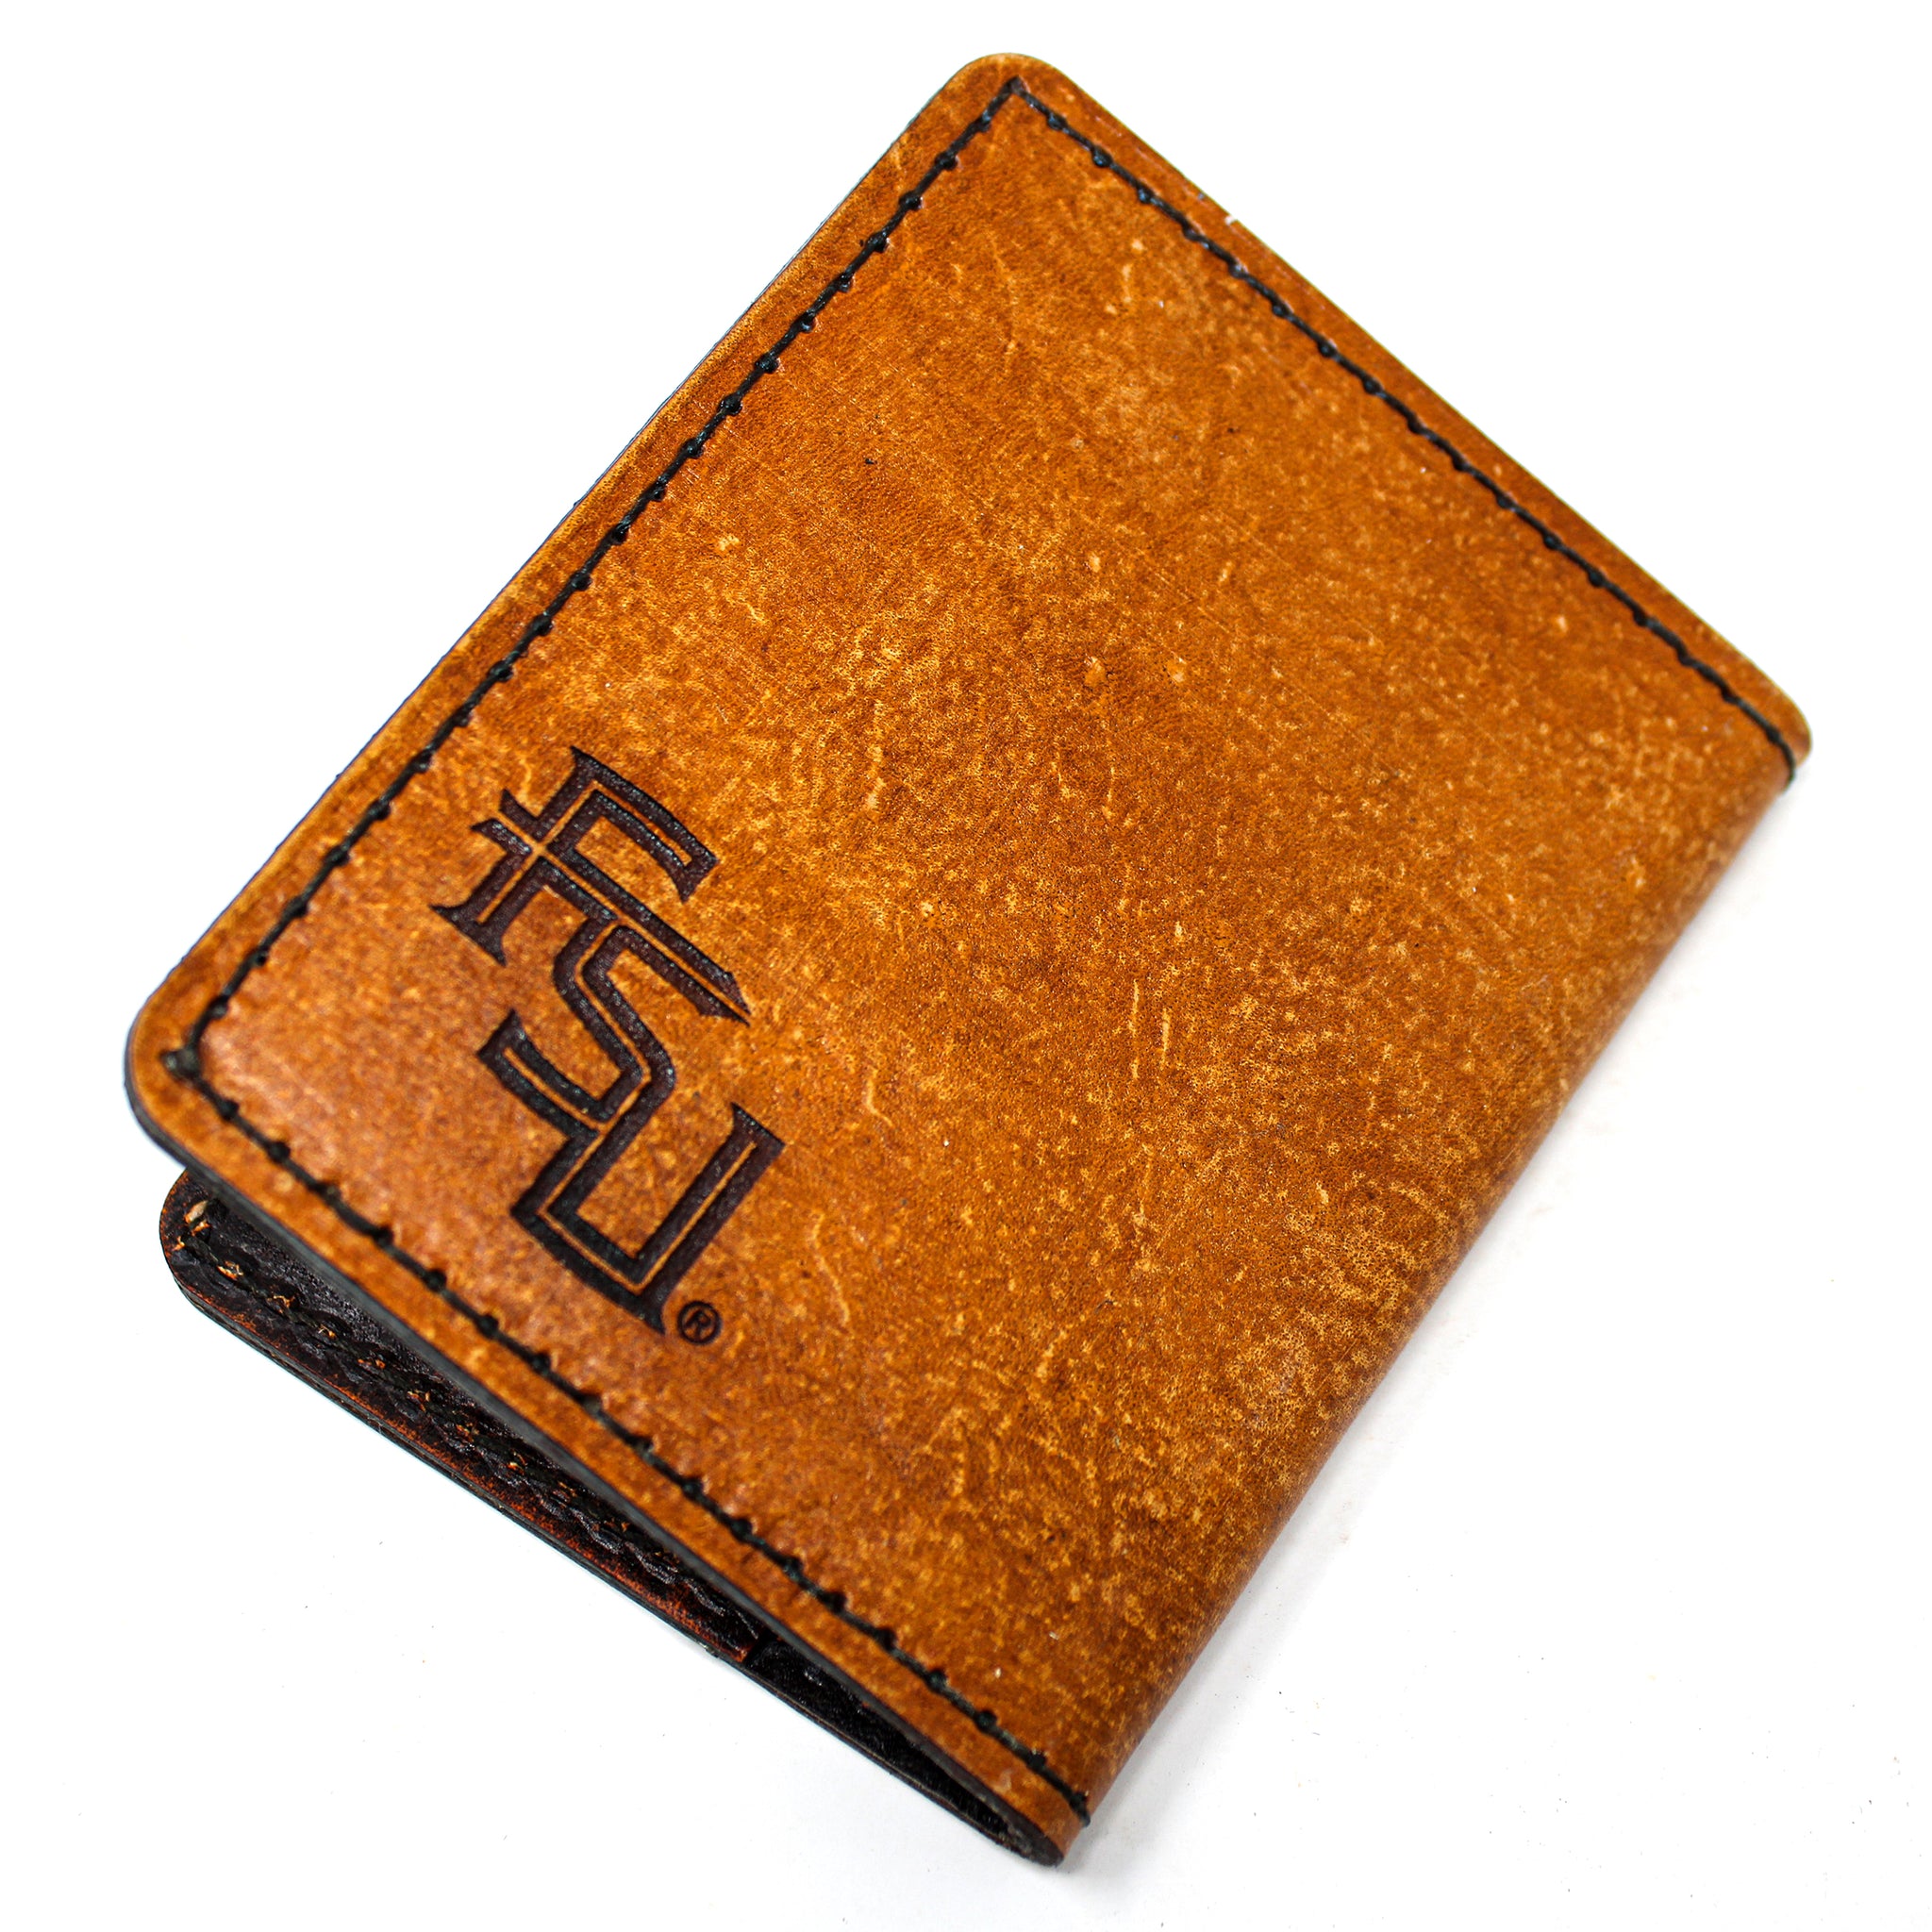 Leather Wallet - FSU Clean